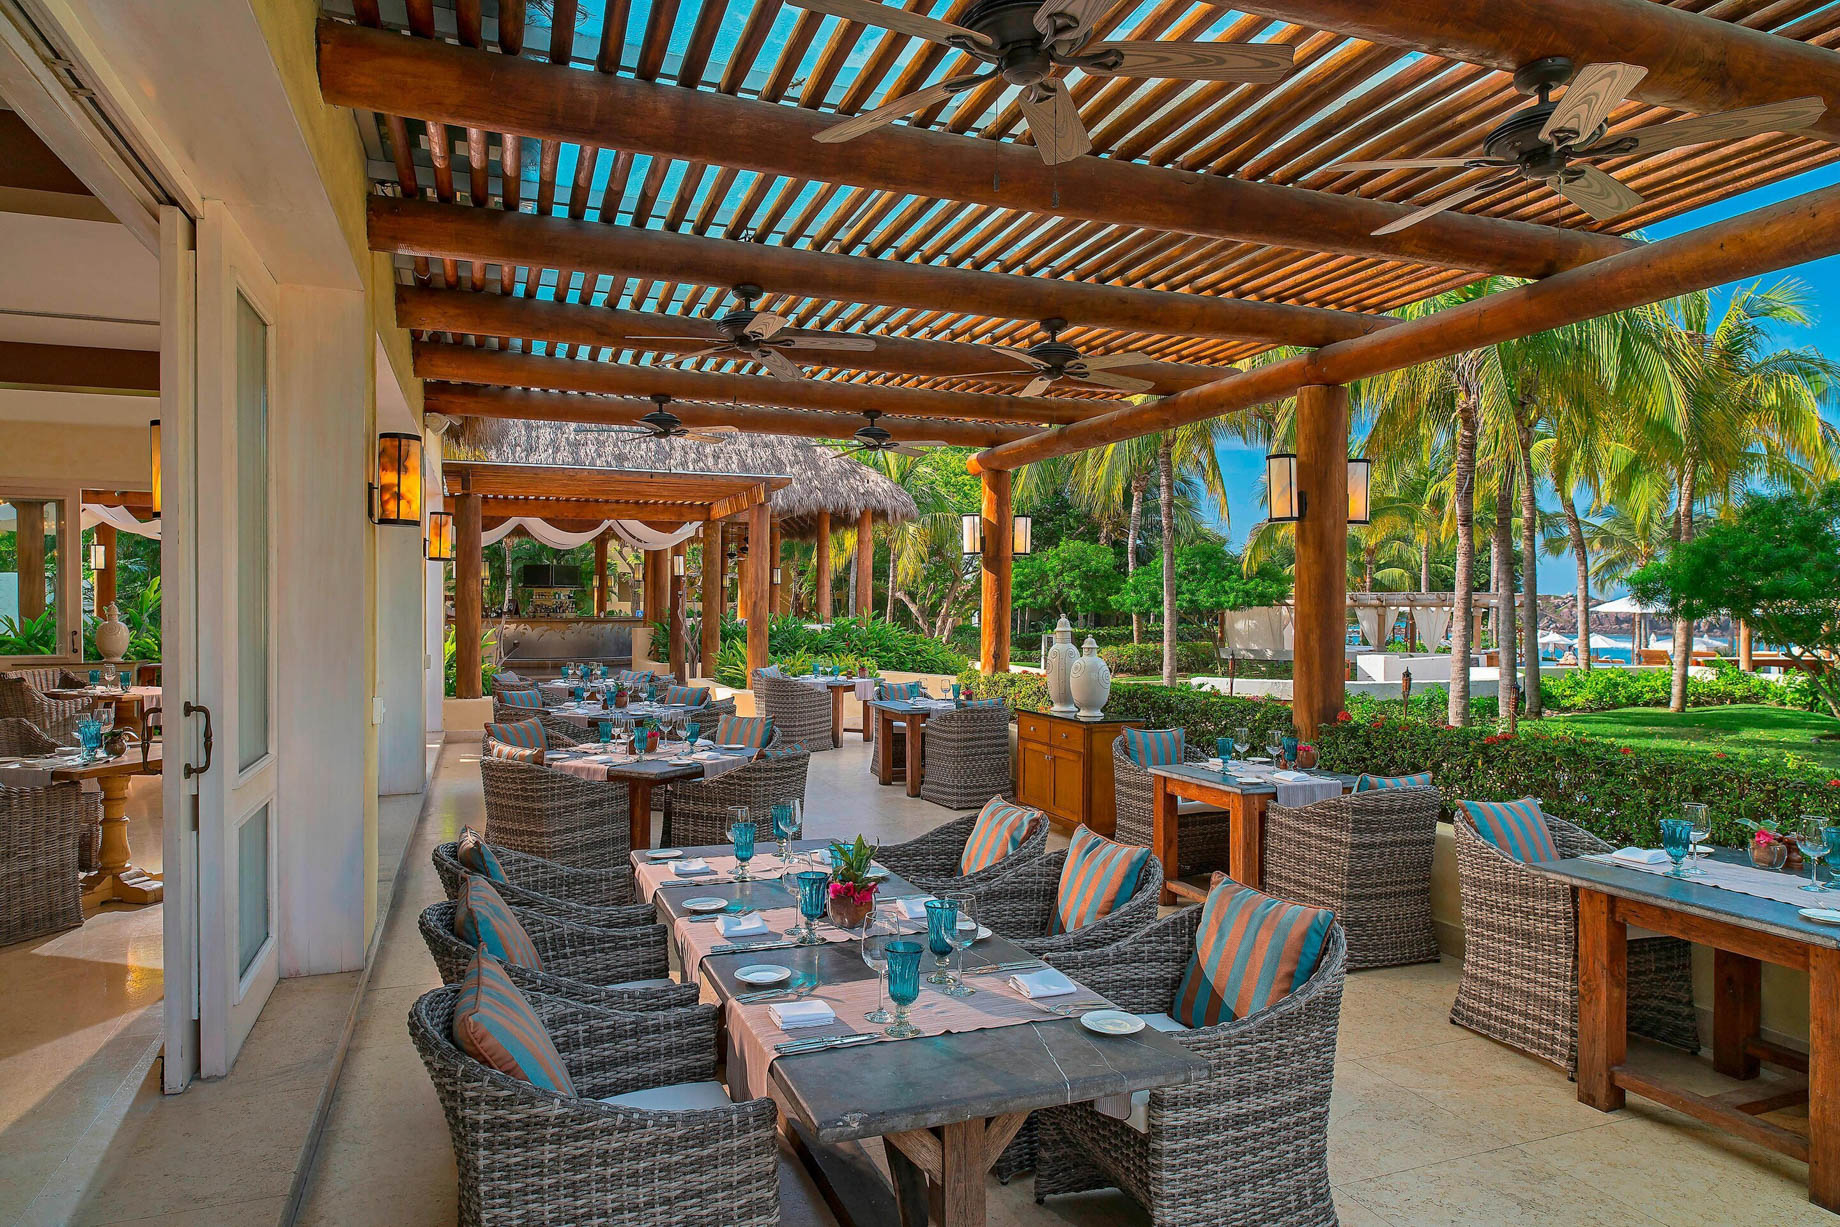 The St. Regis Punta Mita Resort – Nayarit, Mexico – Sea Breeze Restaurant Terrace